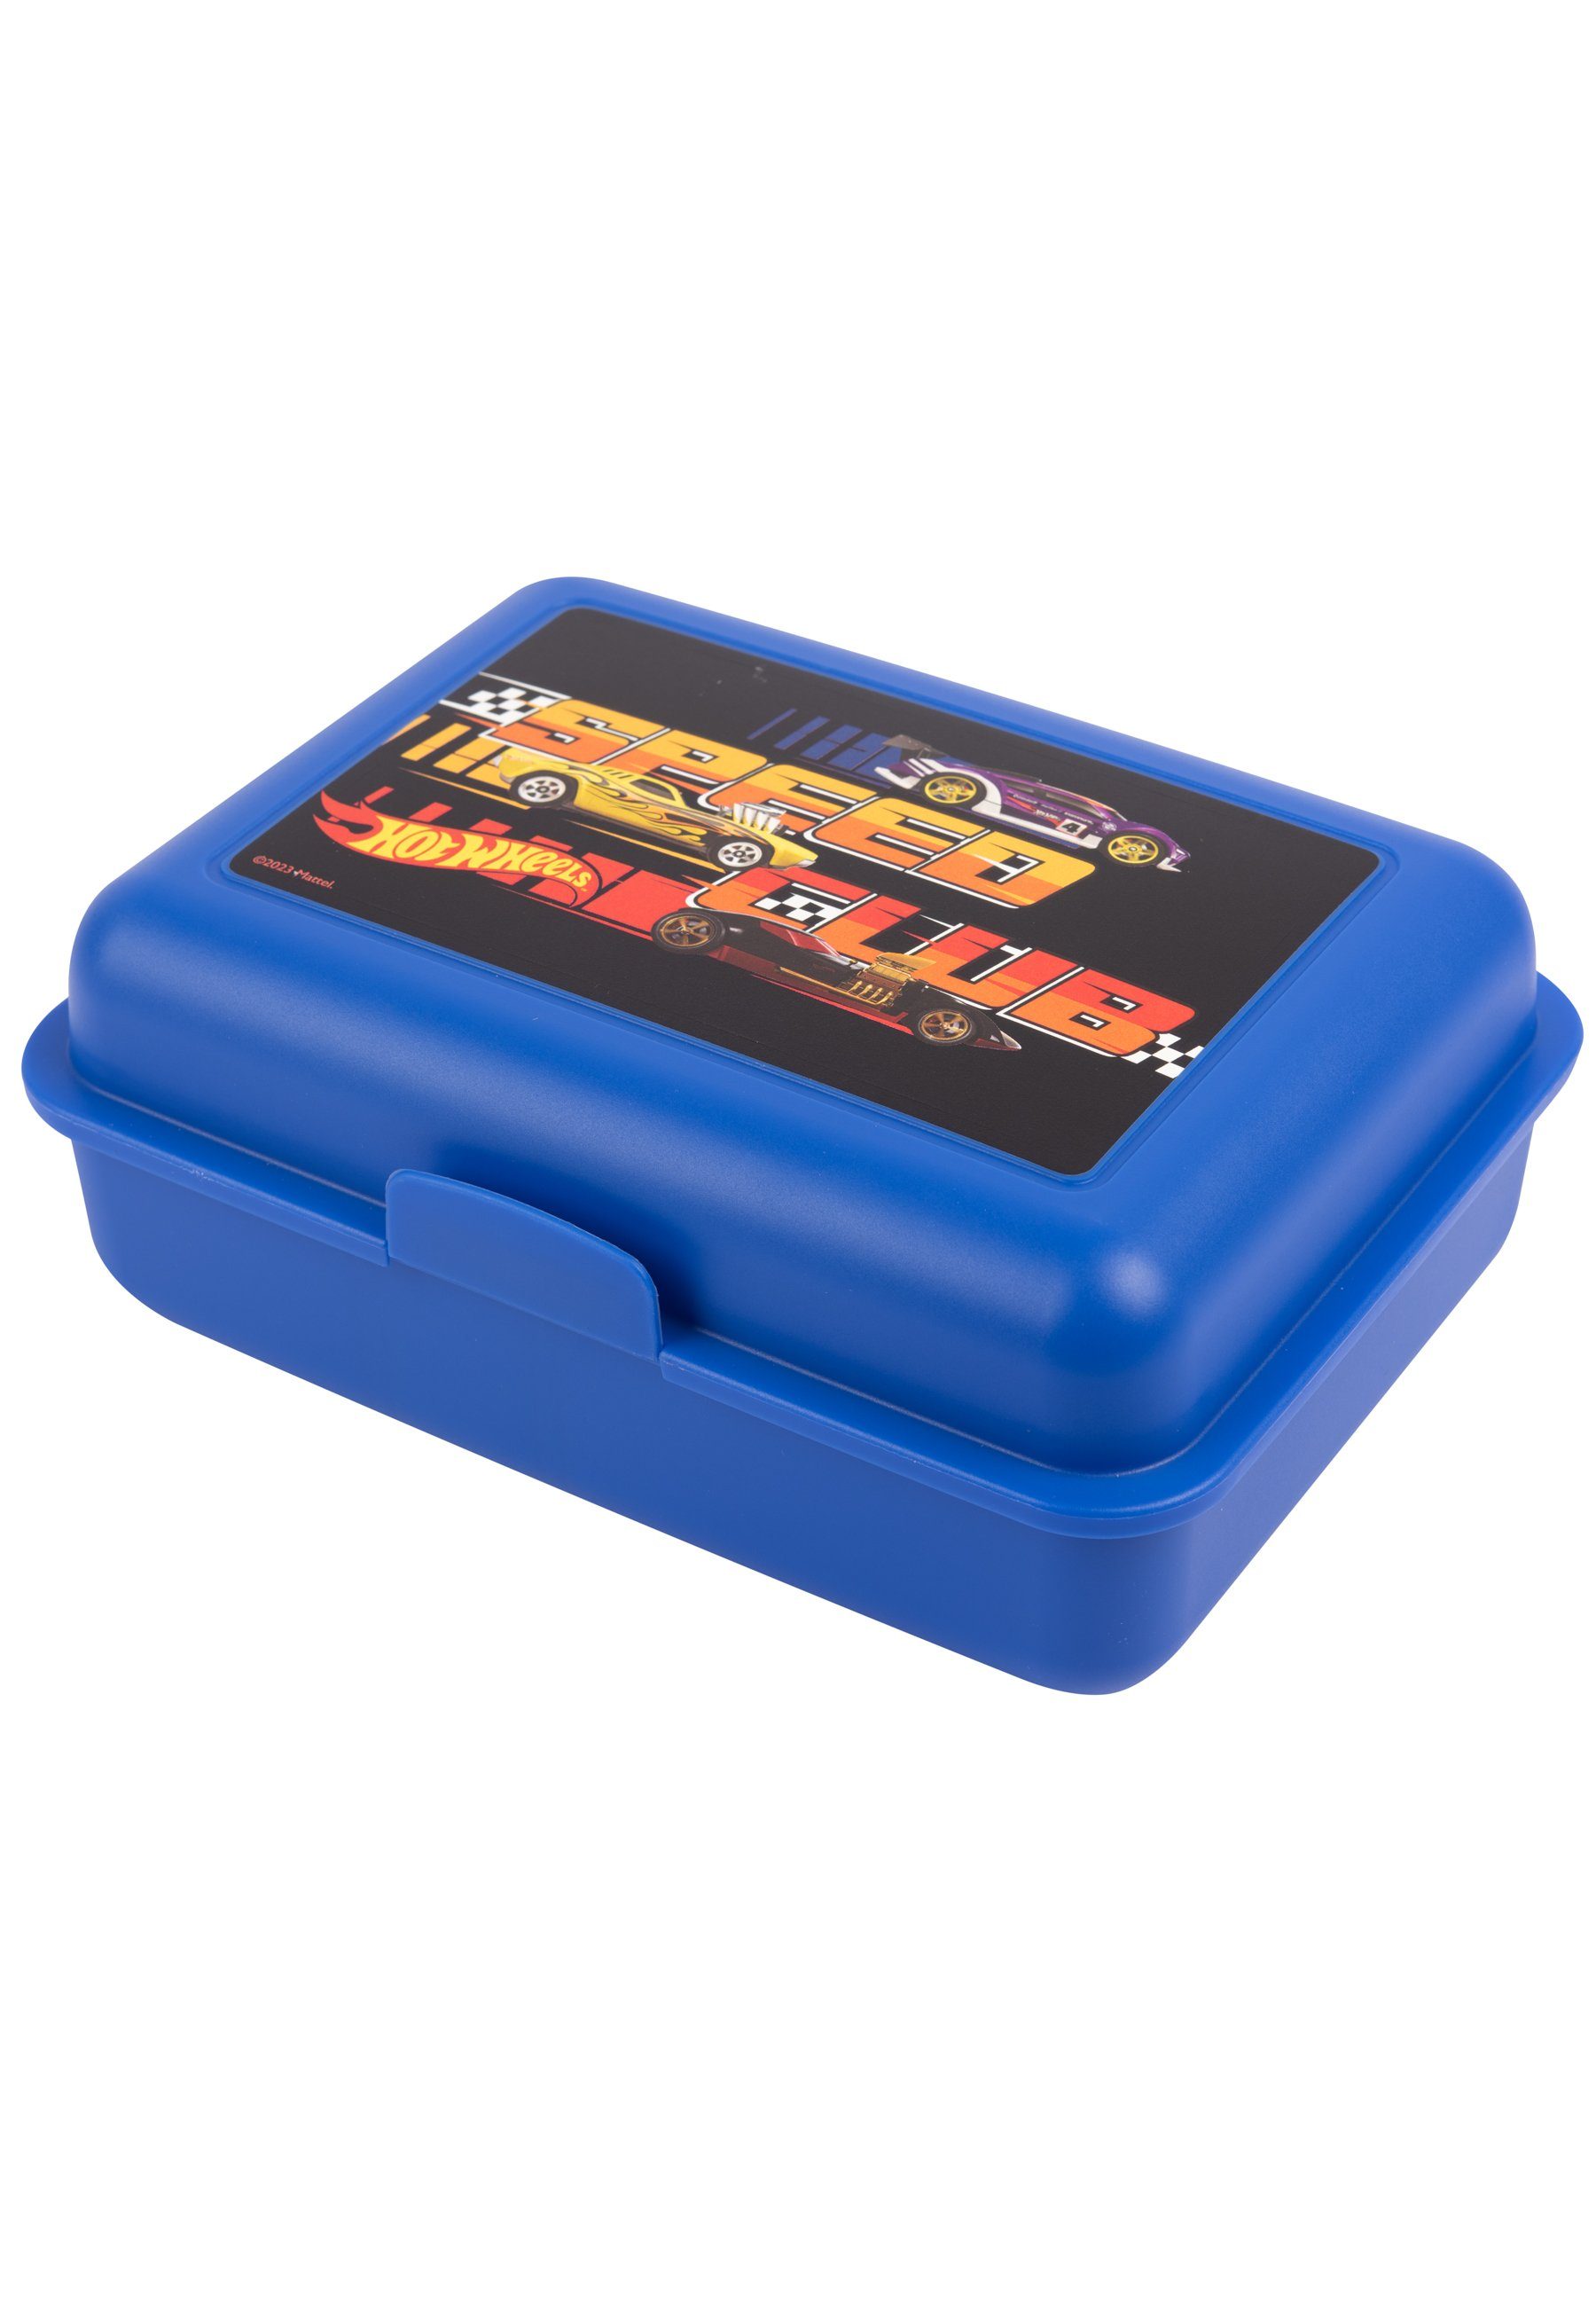 Blau, Trennwand (PP) mit Lunchbox Hot Labels® - United Club Wheels Lunchbox Kunststoff - Brotdose Speed